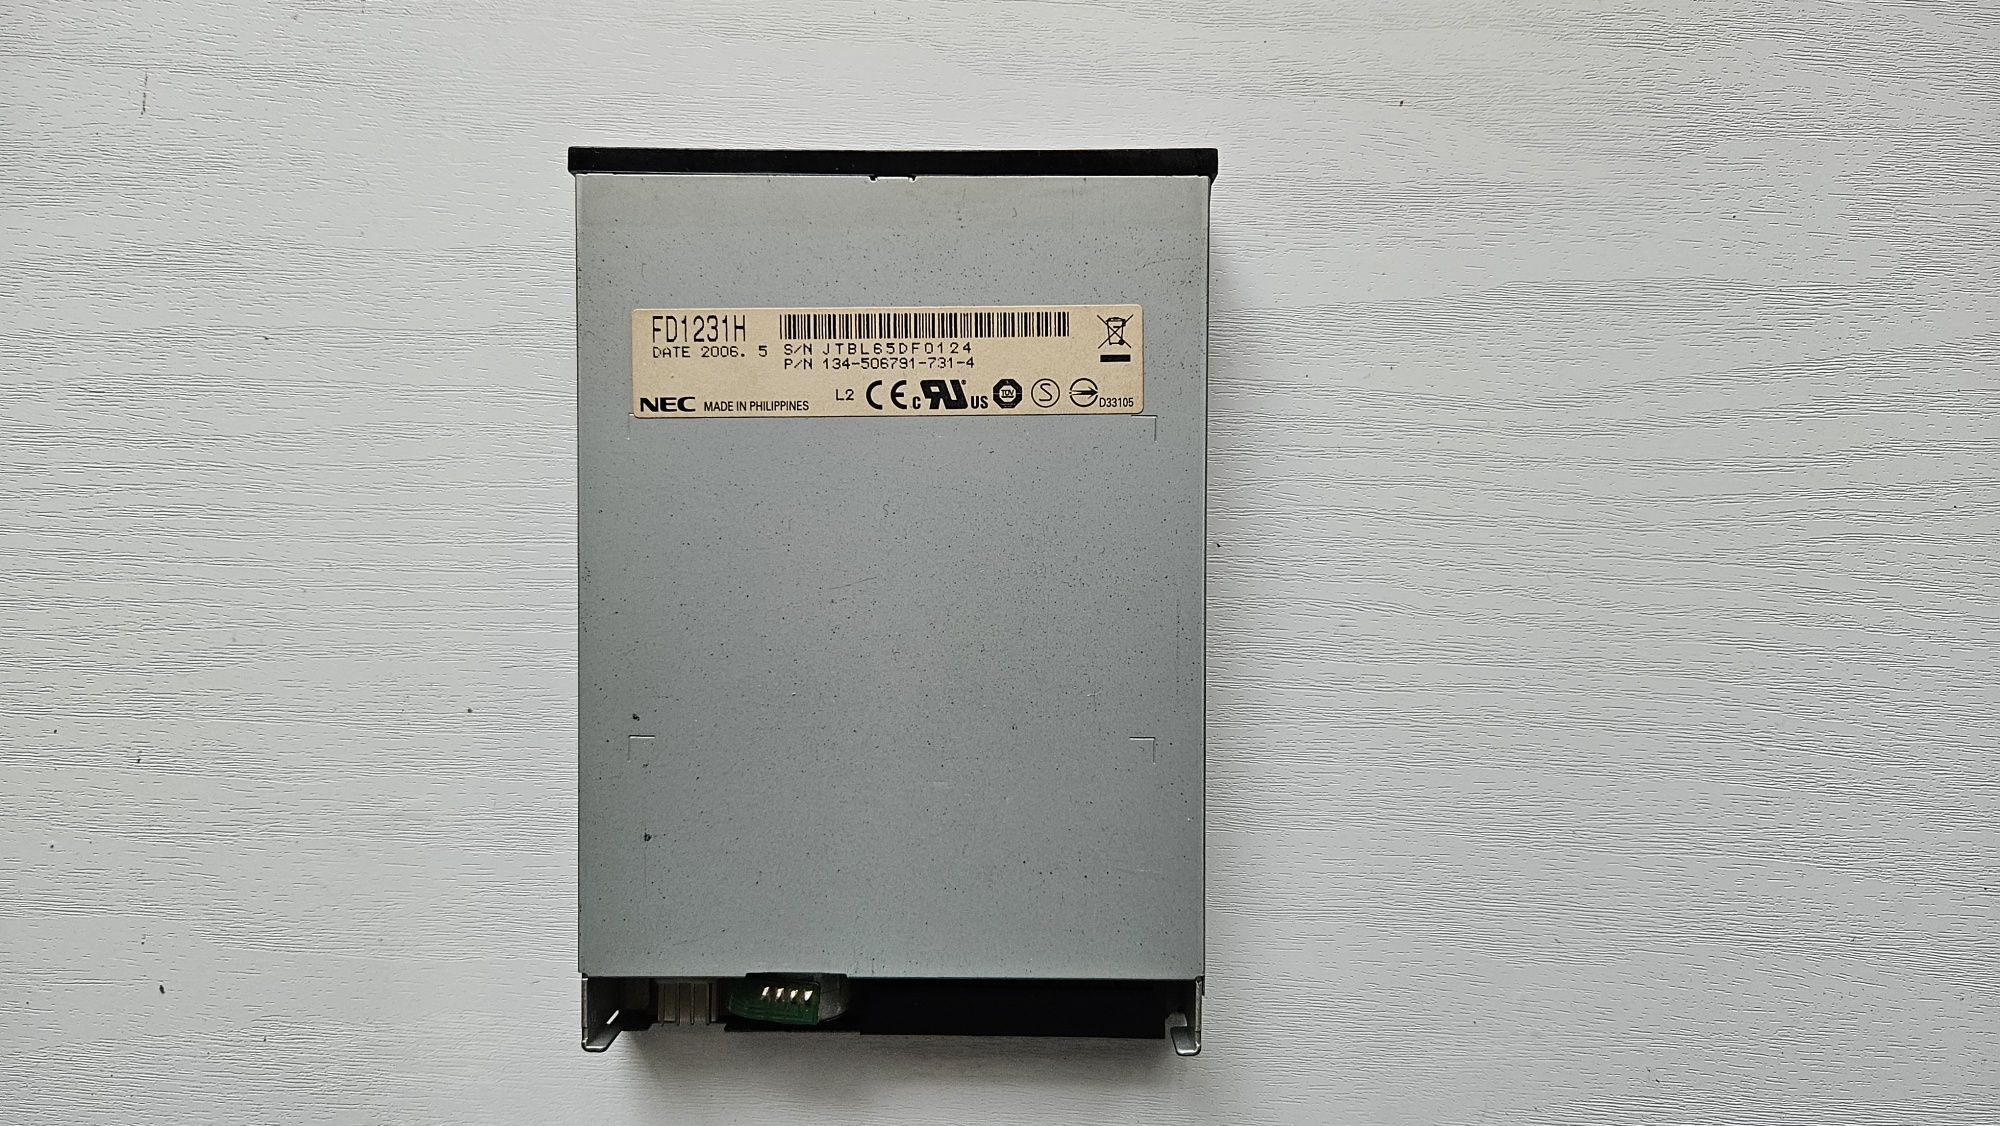 Floppy disk drive Nec FD1231H